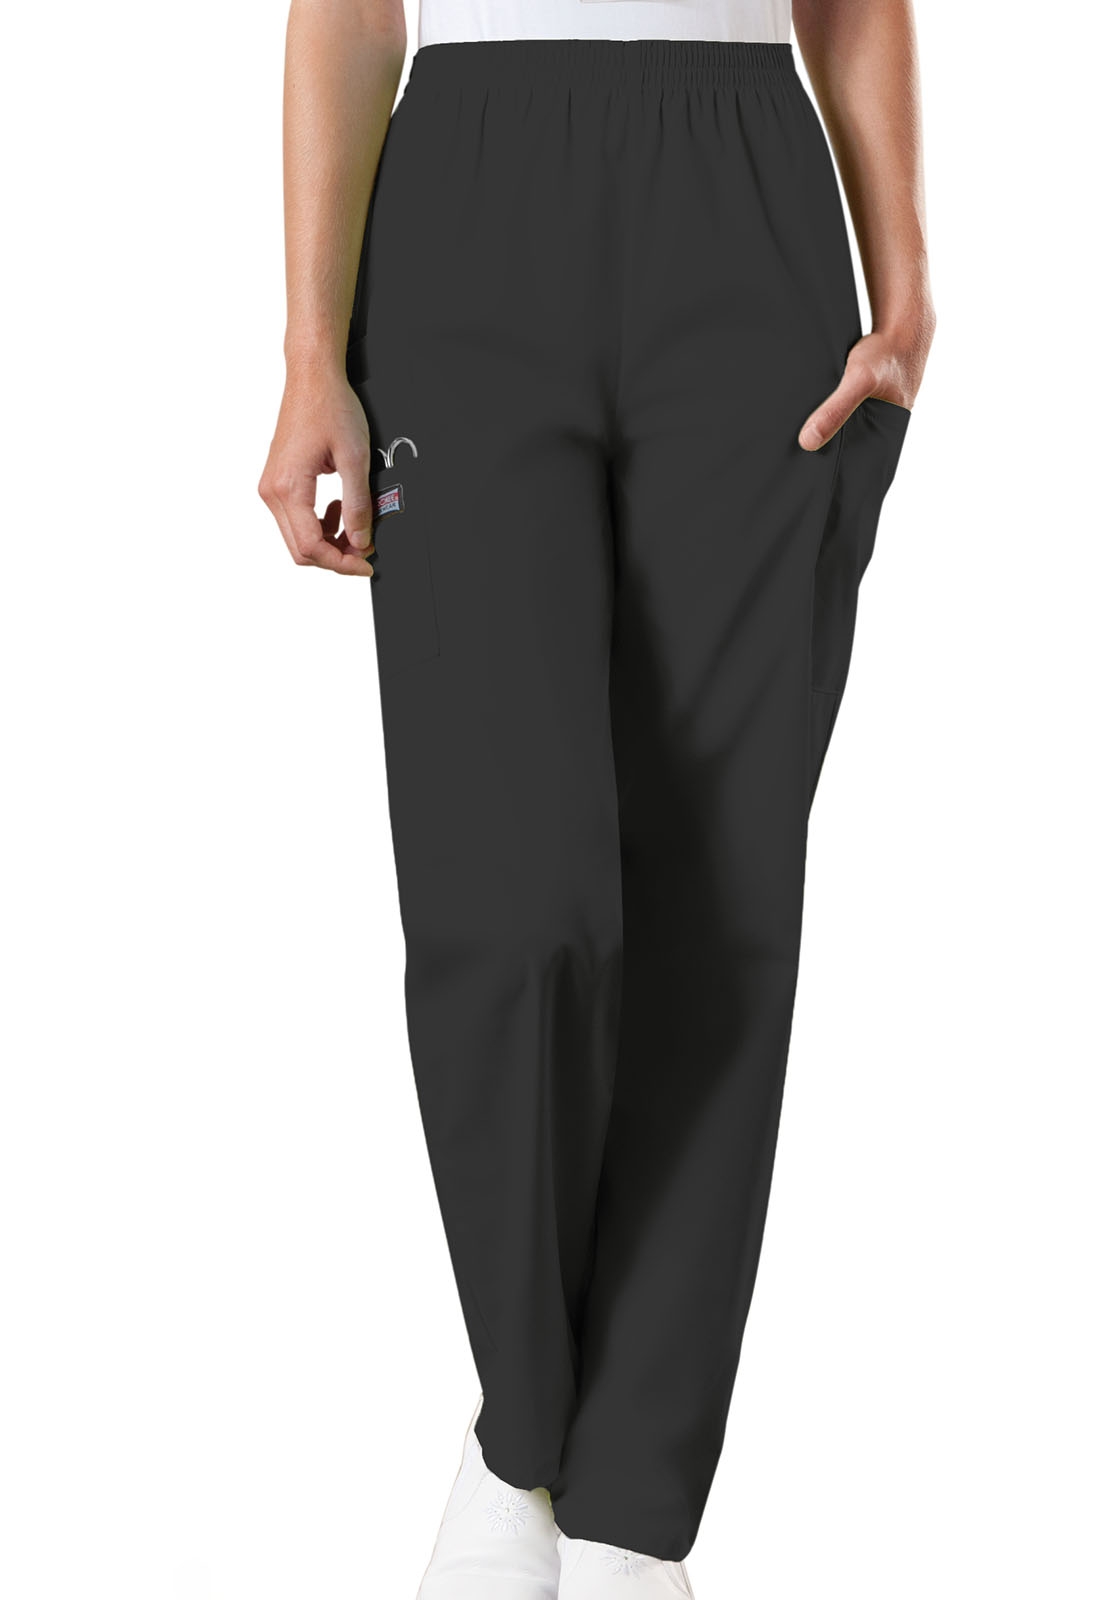 Cherokee WorkWear Originals Women's Elastic Pull On Cargo Scrub Pants-4200 (Black - Medium Petit